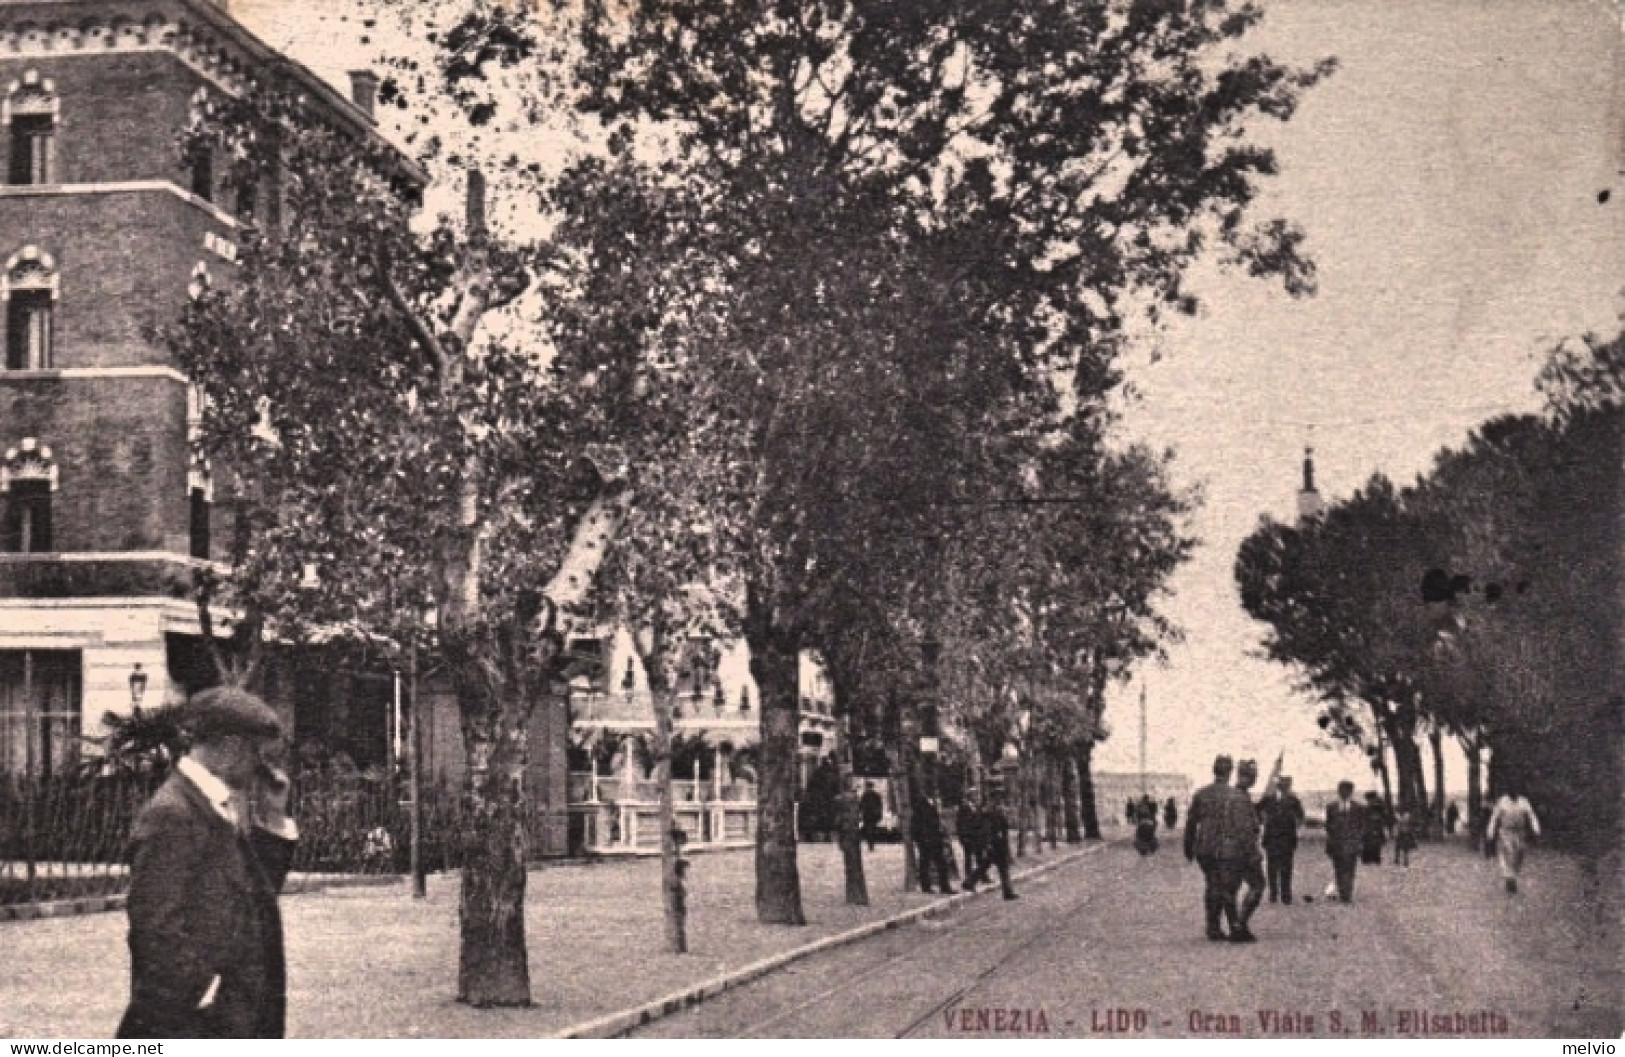 1915-Venezia Lido Gran Viale S.M. Elisabetta, Cartolina Viaggiata - Venezia (Venice)